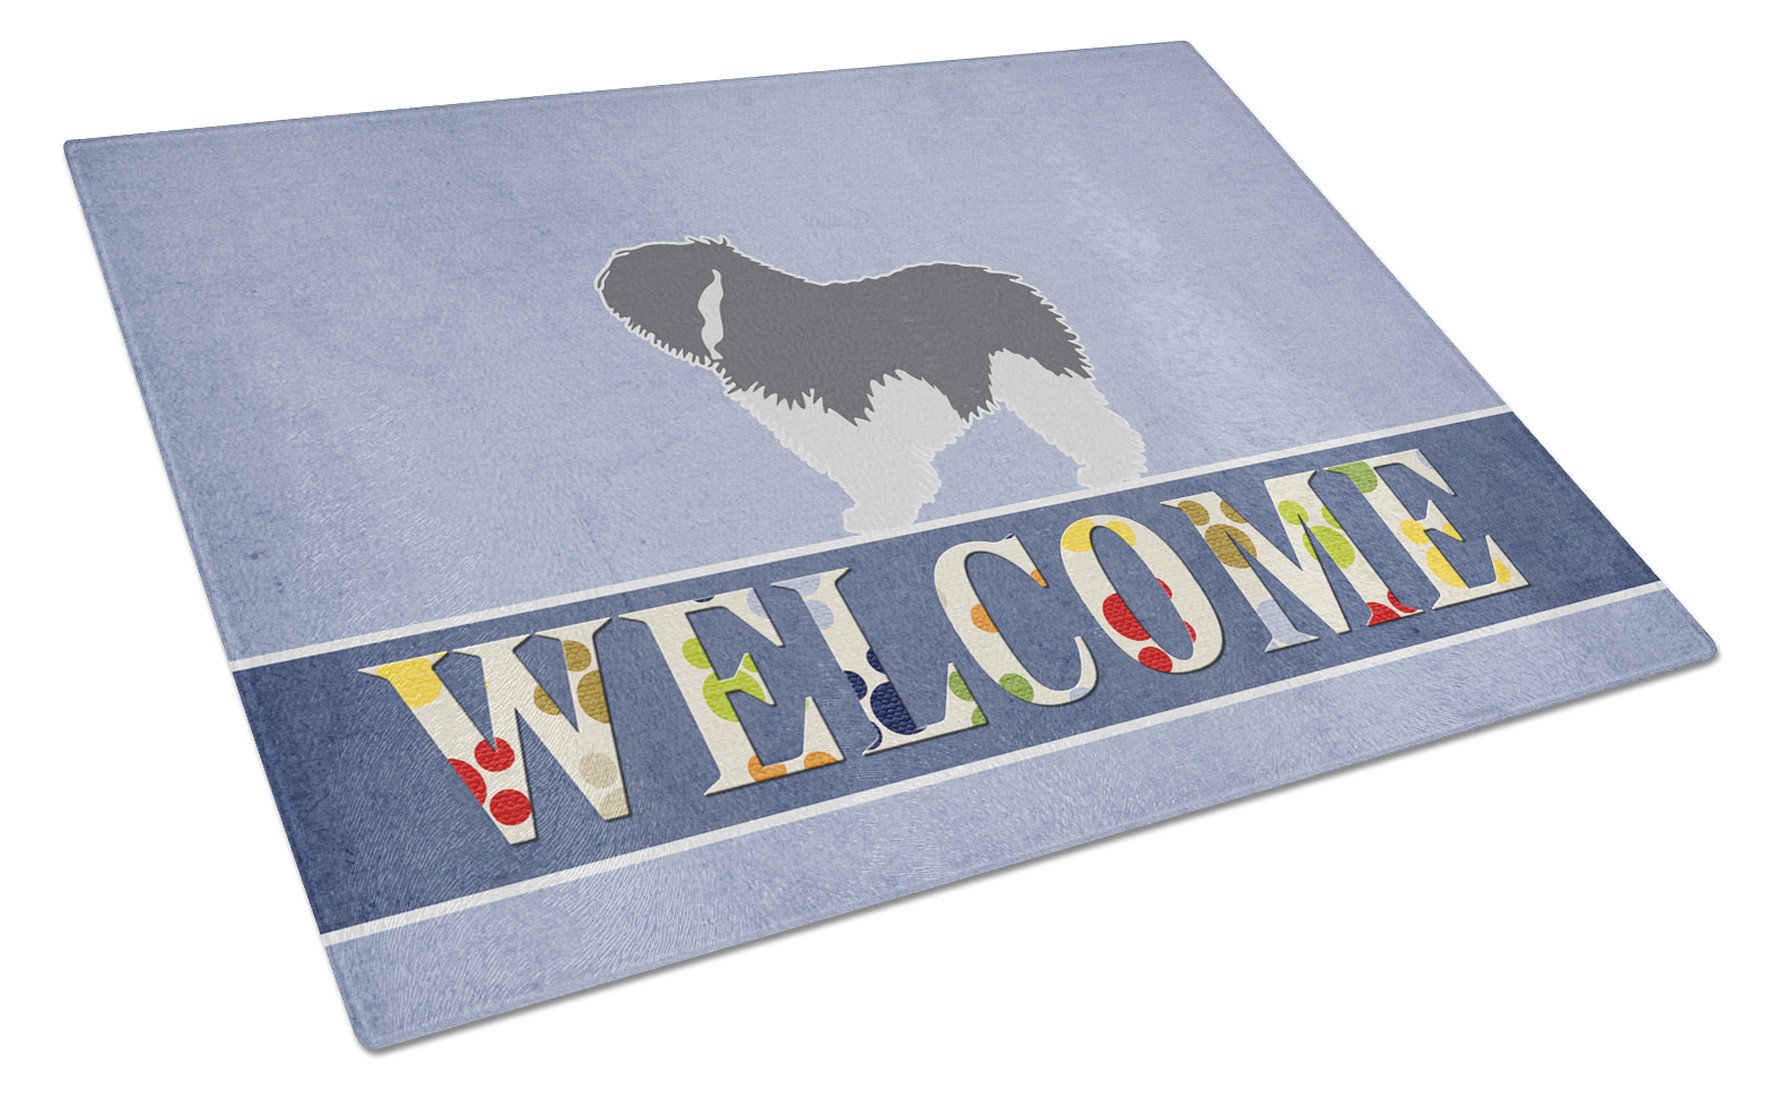 Polish Lowland Sheepdog Dog Welcome Glass Cutting Board Large BB5536LCB by Caroline's Treasures